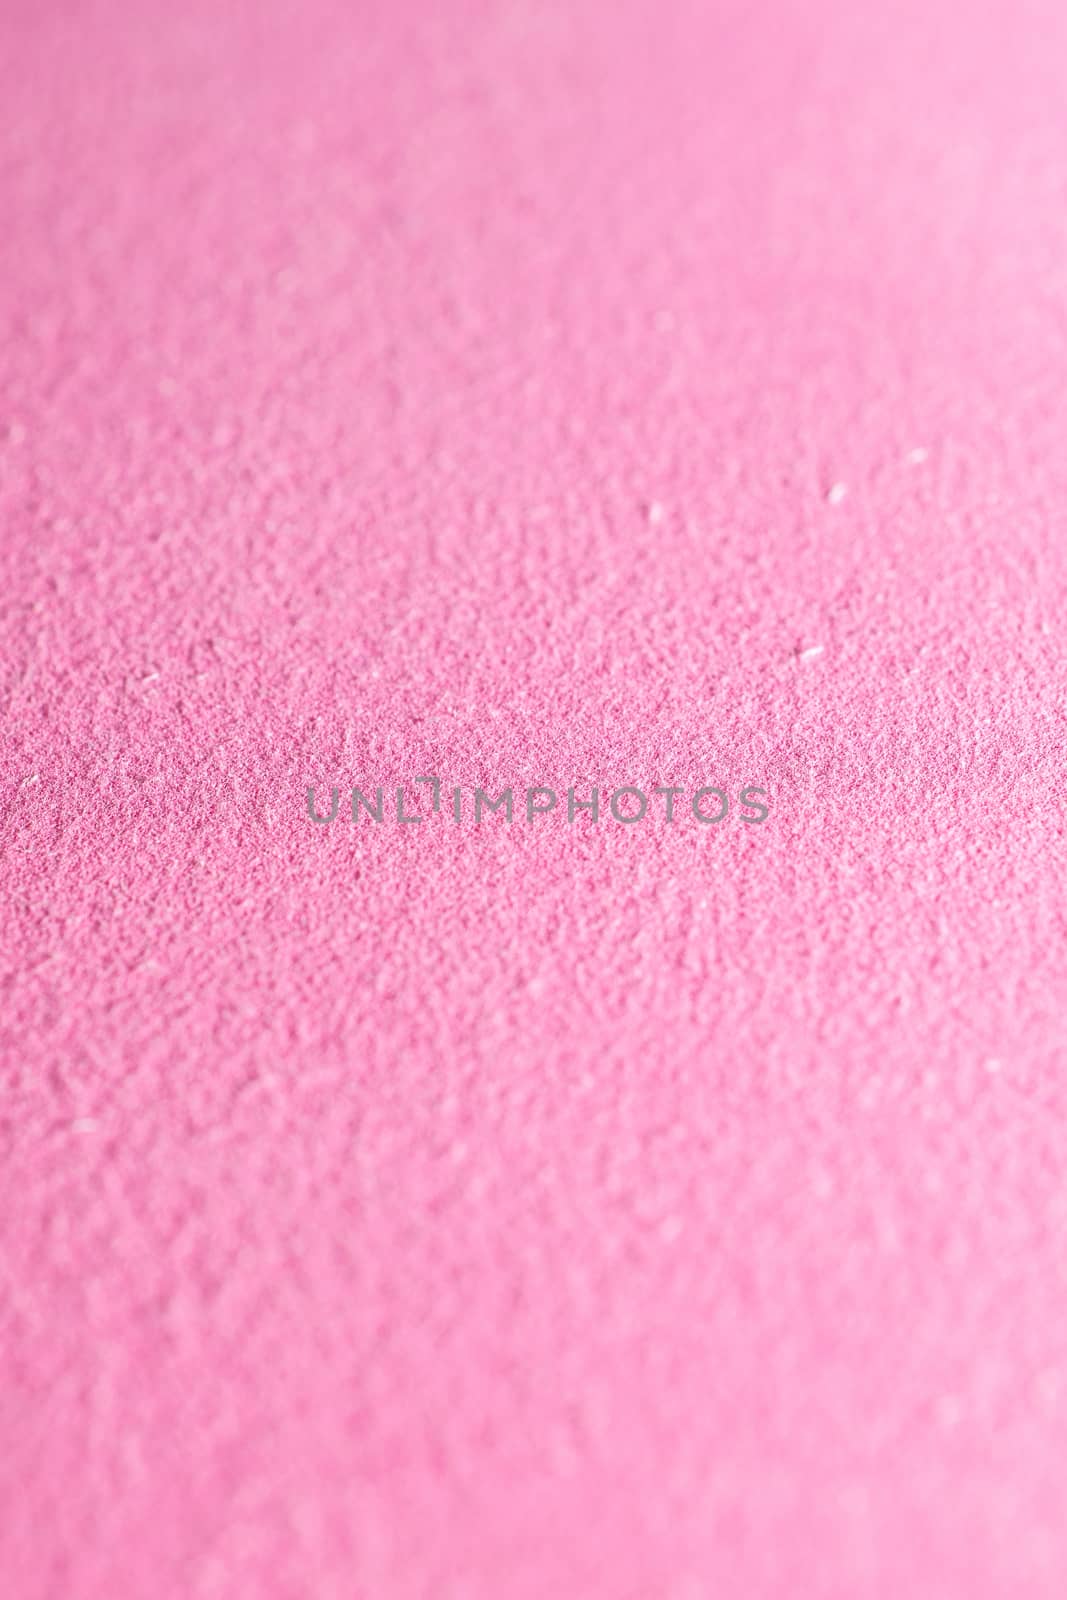 pink velvet background texture